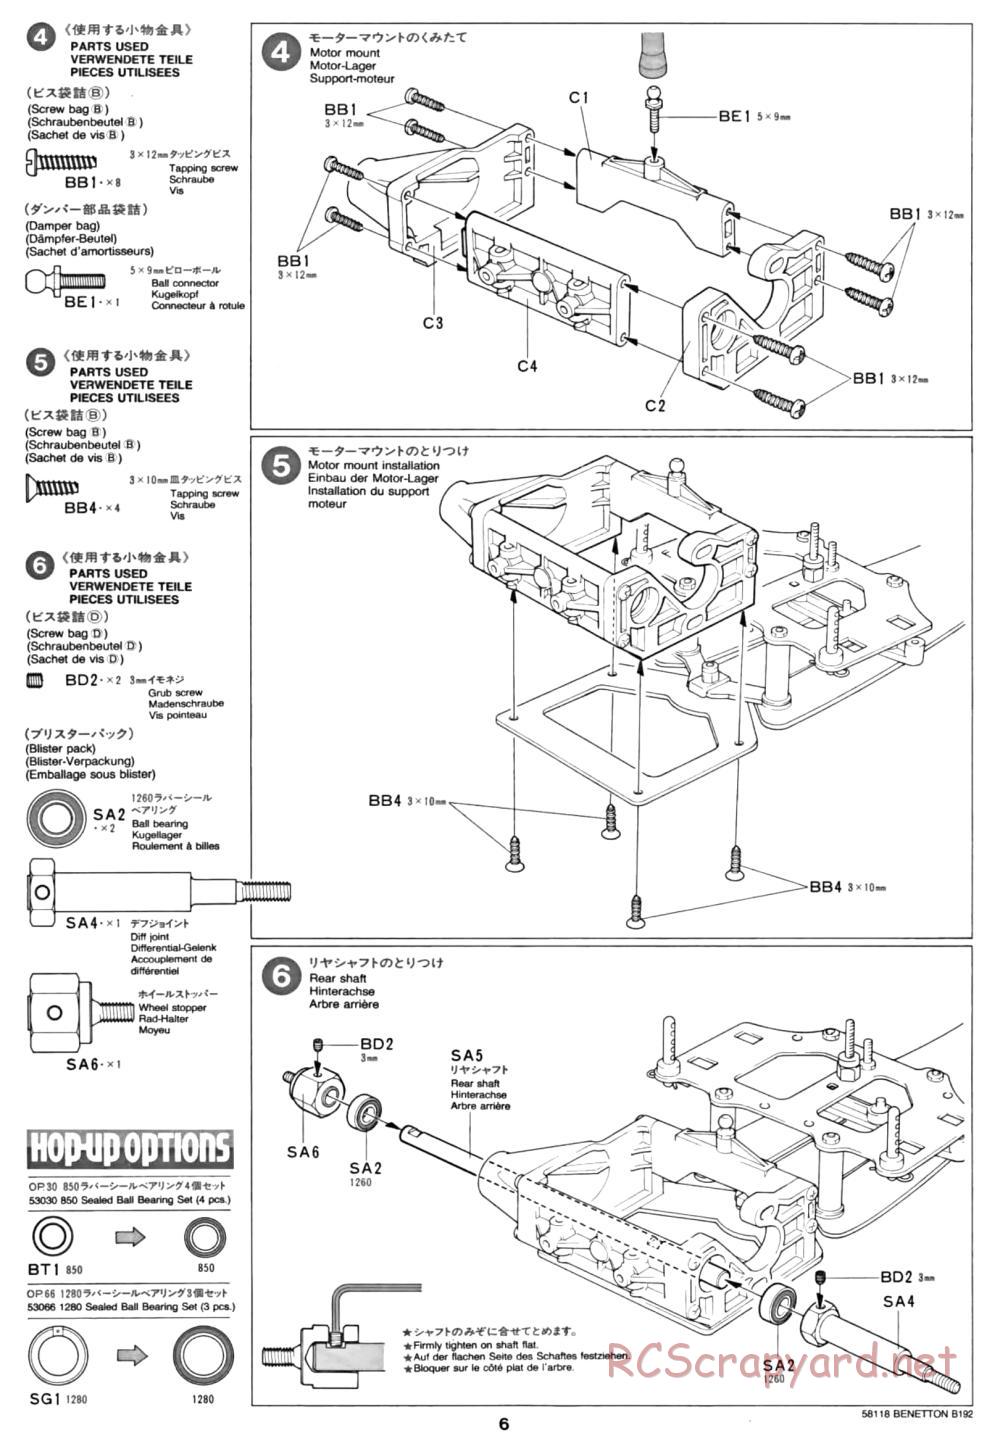 Tamiya - Benetton B192 - F102 Chassis - Manual - Page 6